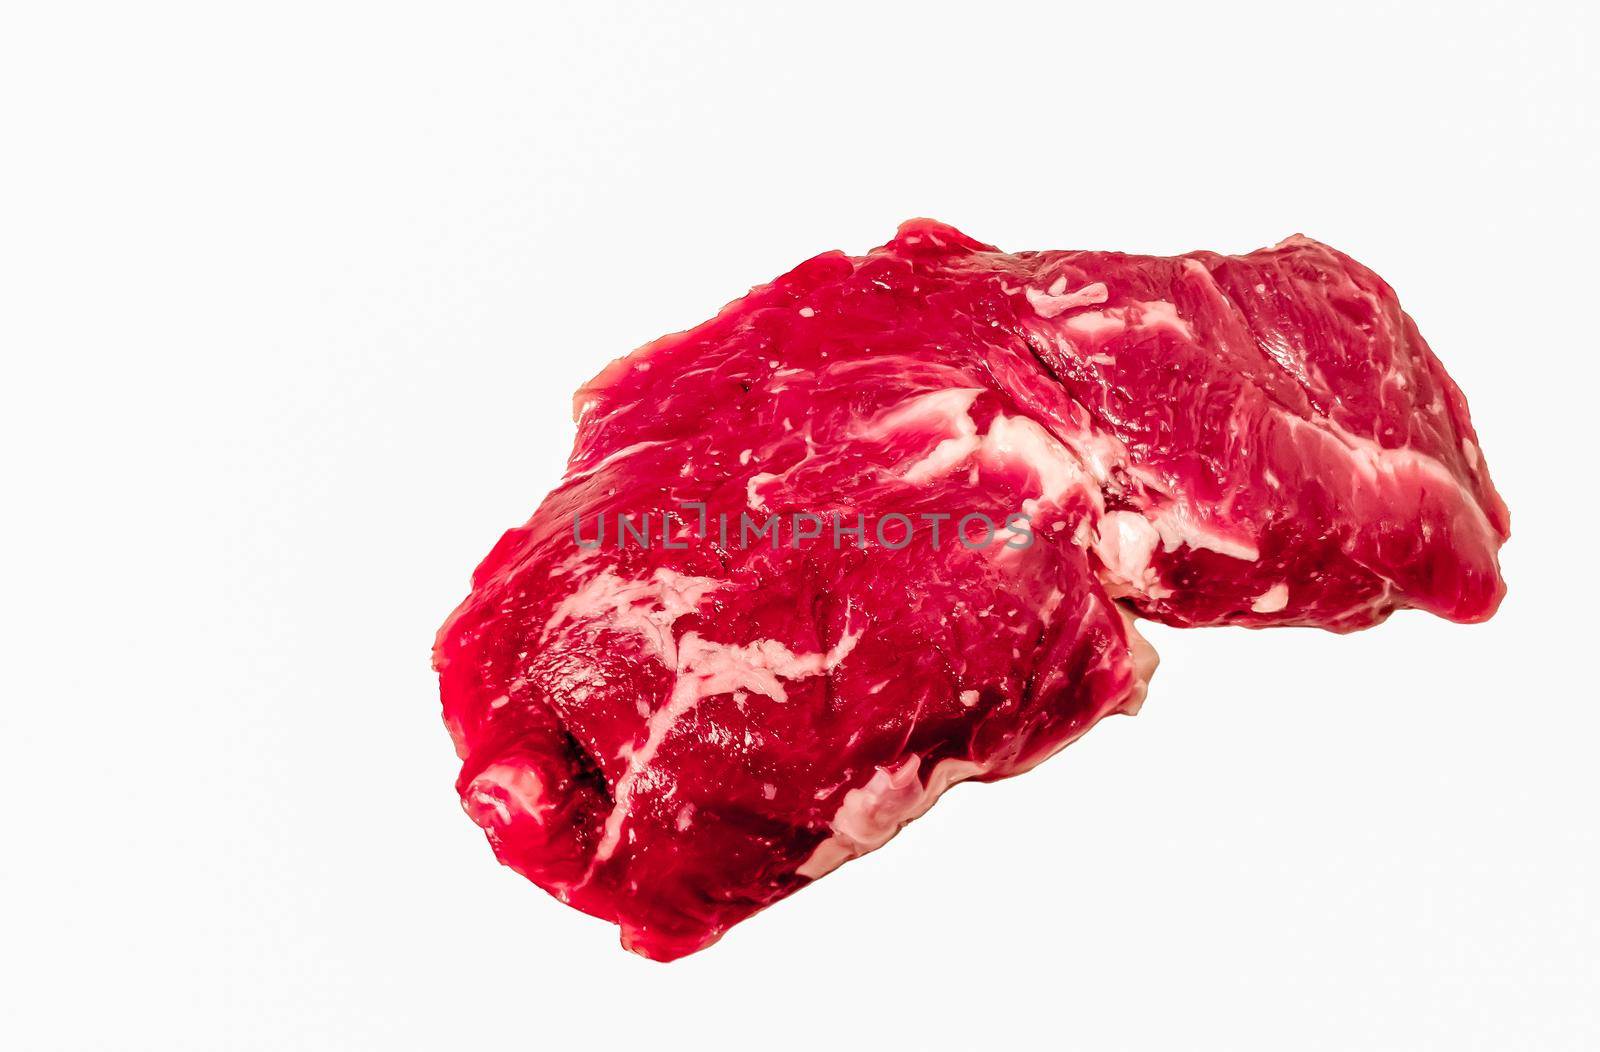 "Spider steak" or "bifteck araignée" of marbled beef on white background. by Milanchikov